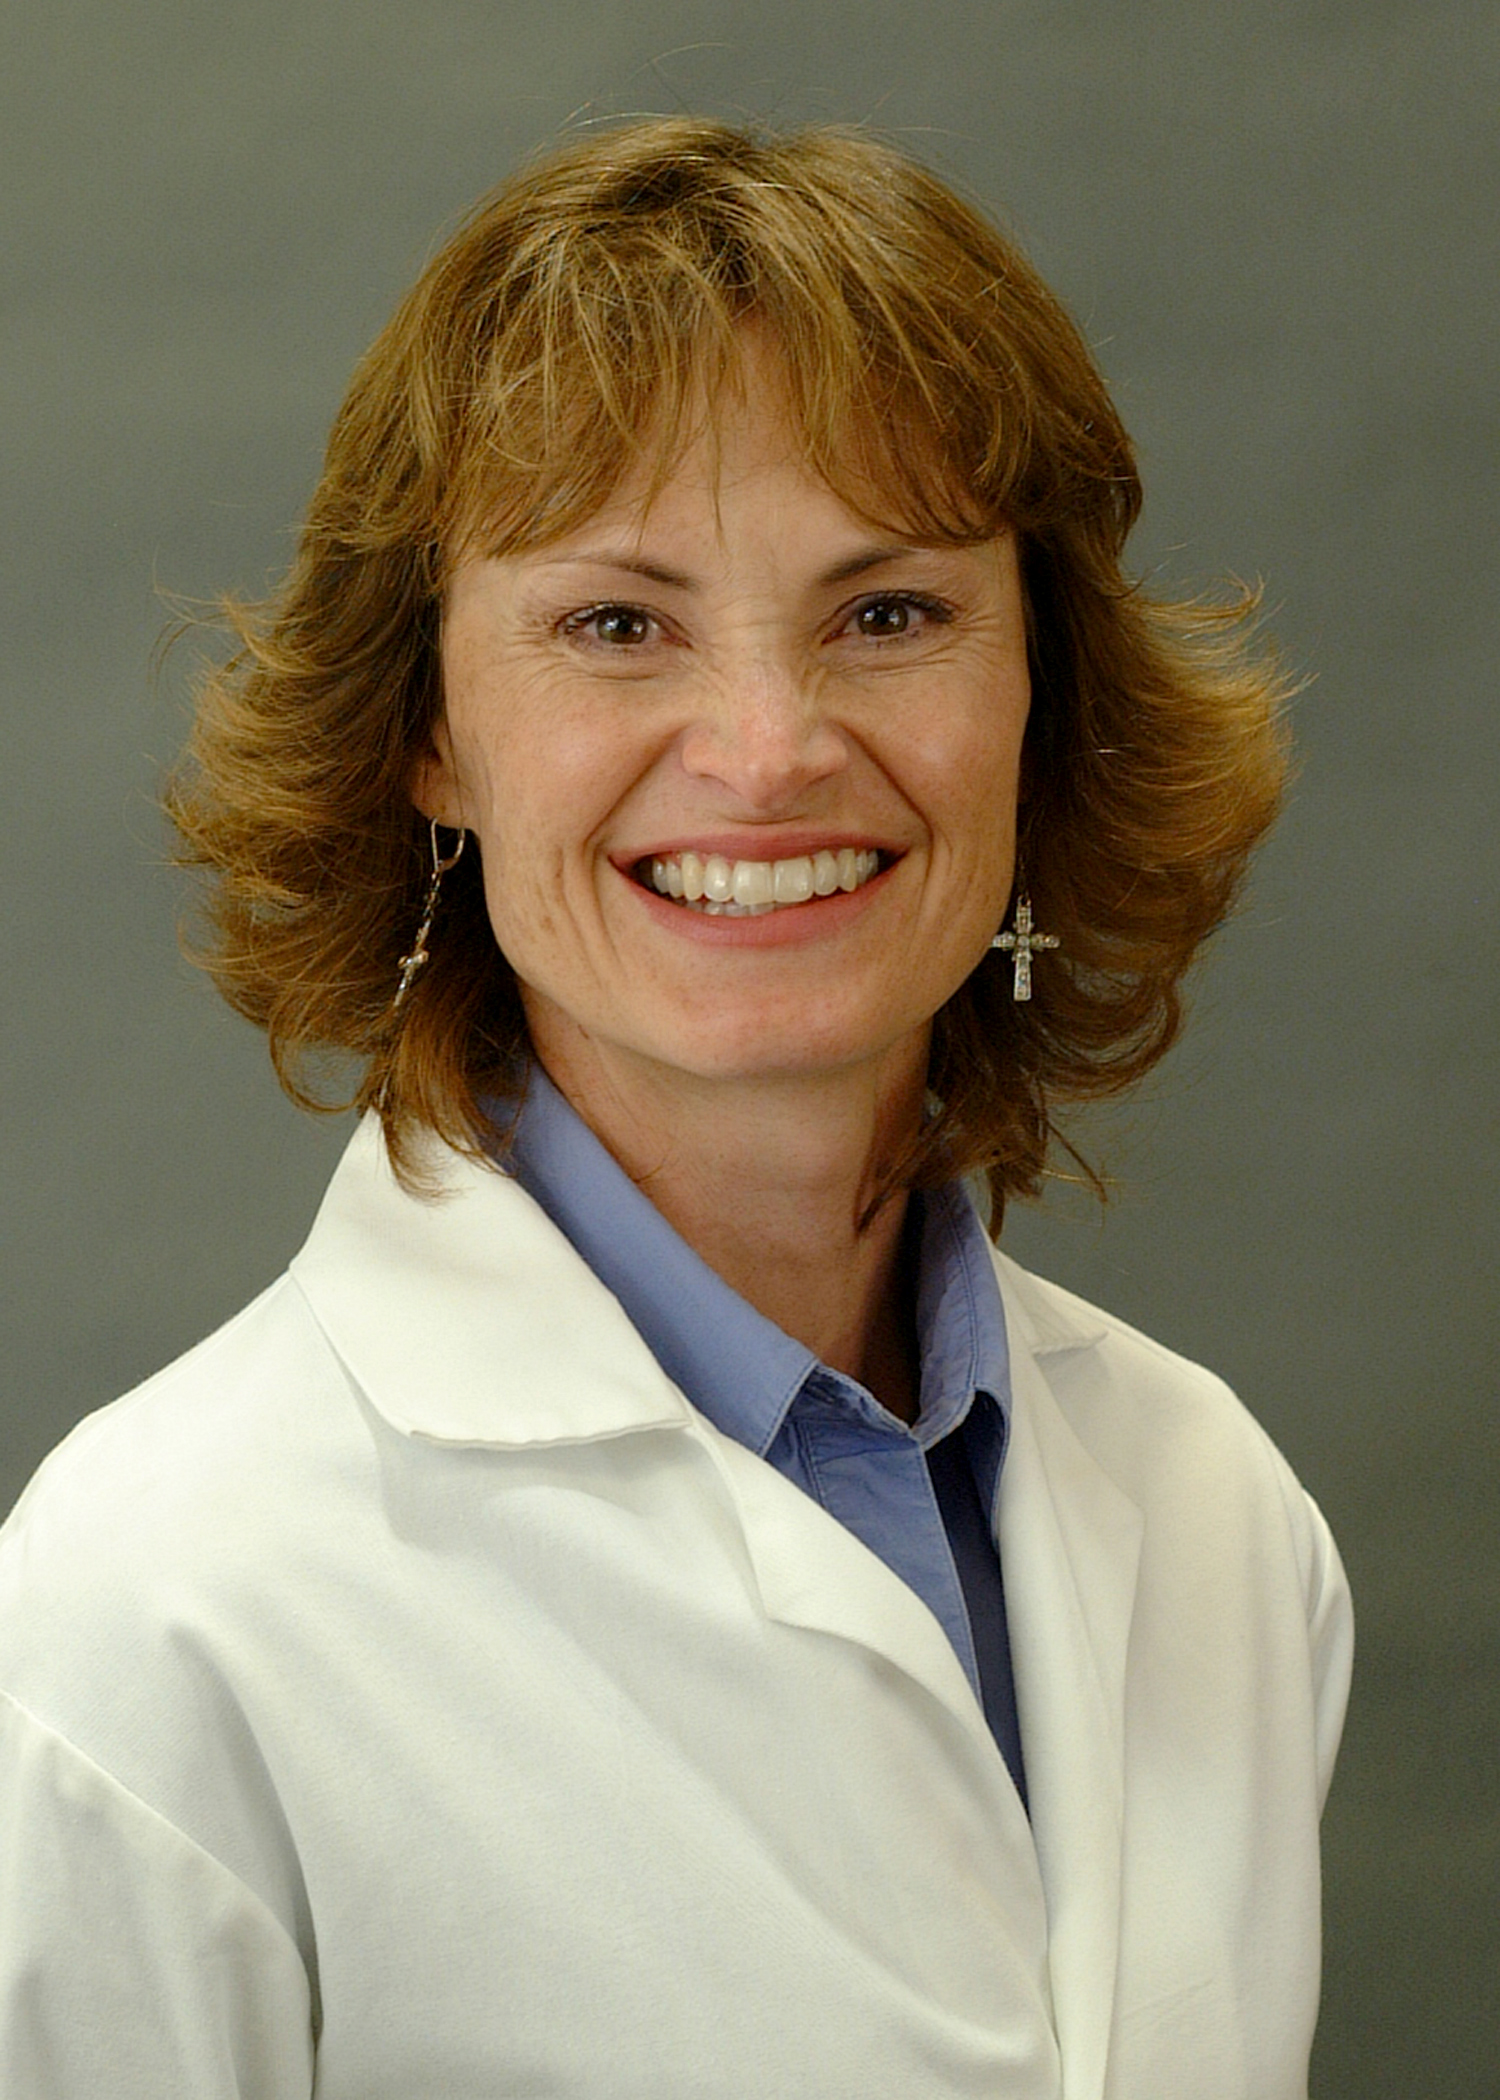 Dr. Kathy Gaughan